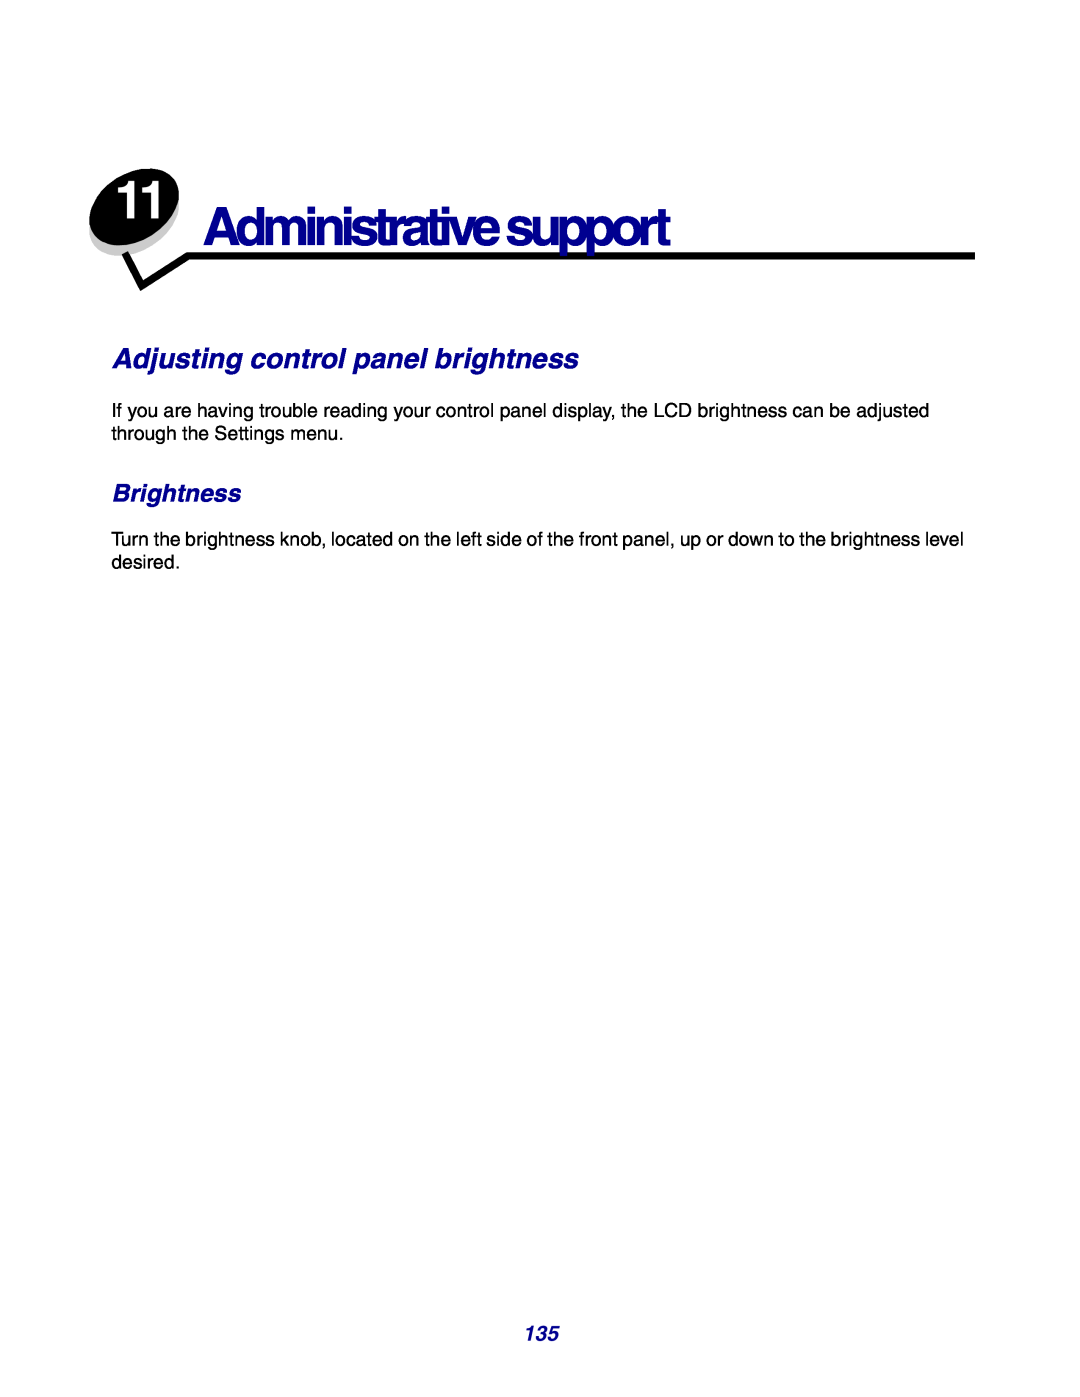 Lexmark X642e manual Adjusting control panel brightness, Brightness, Administrativesupport 